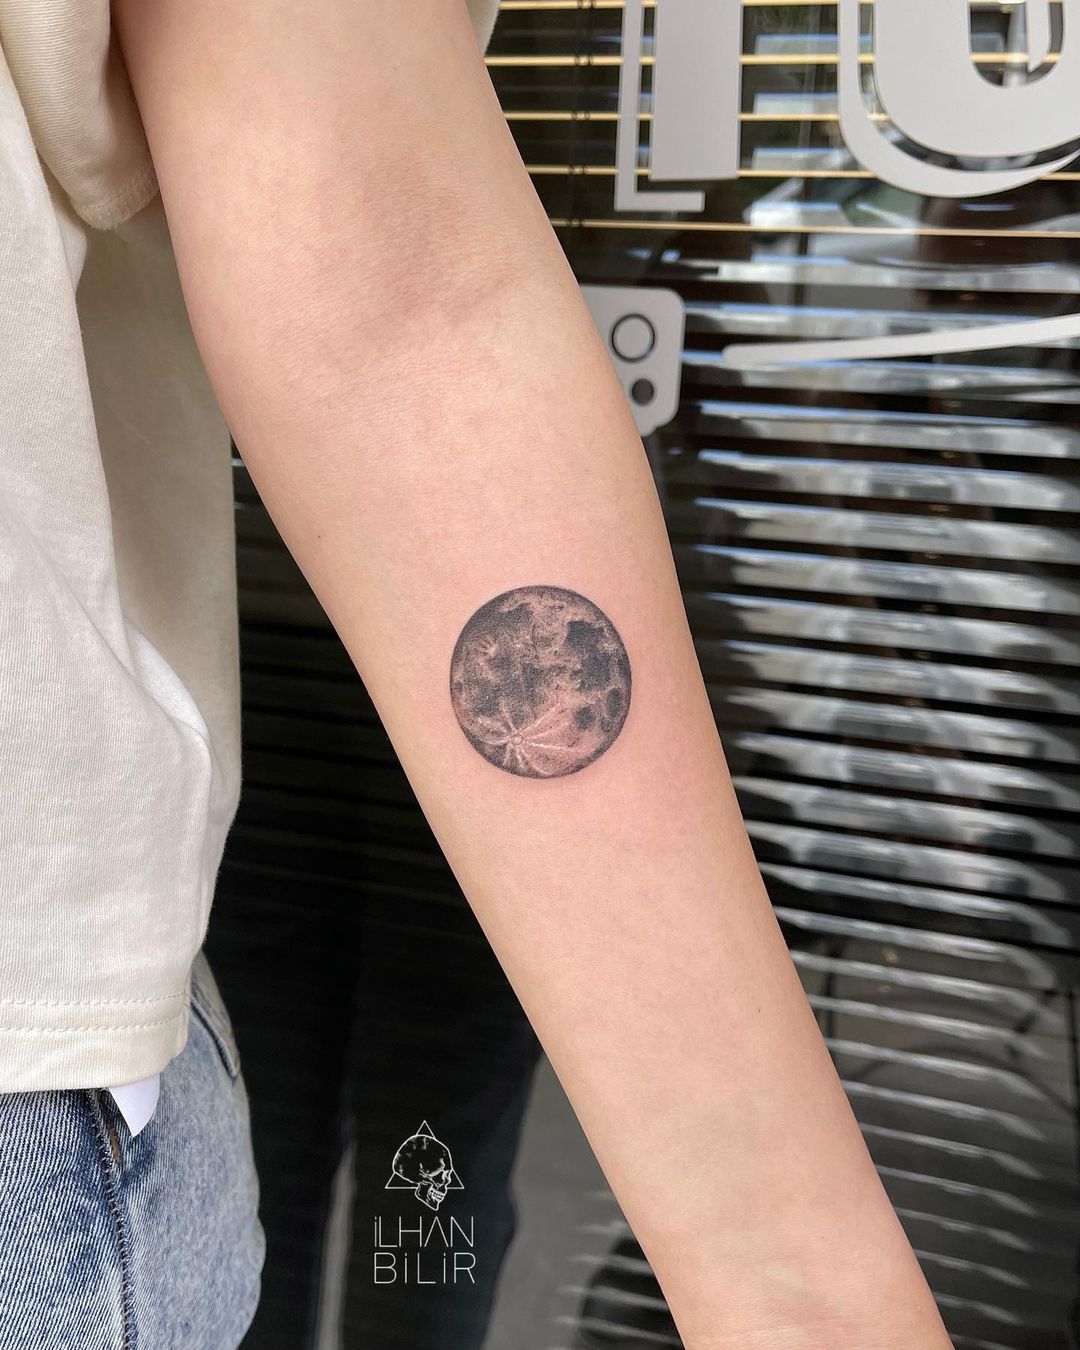 Realistic full moon tattoo on arm. (Source: @ilhan_bilir)